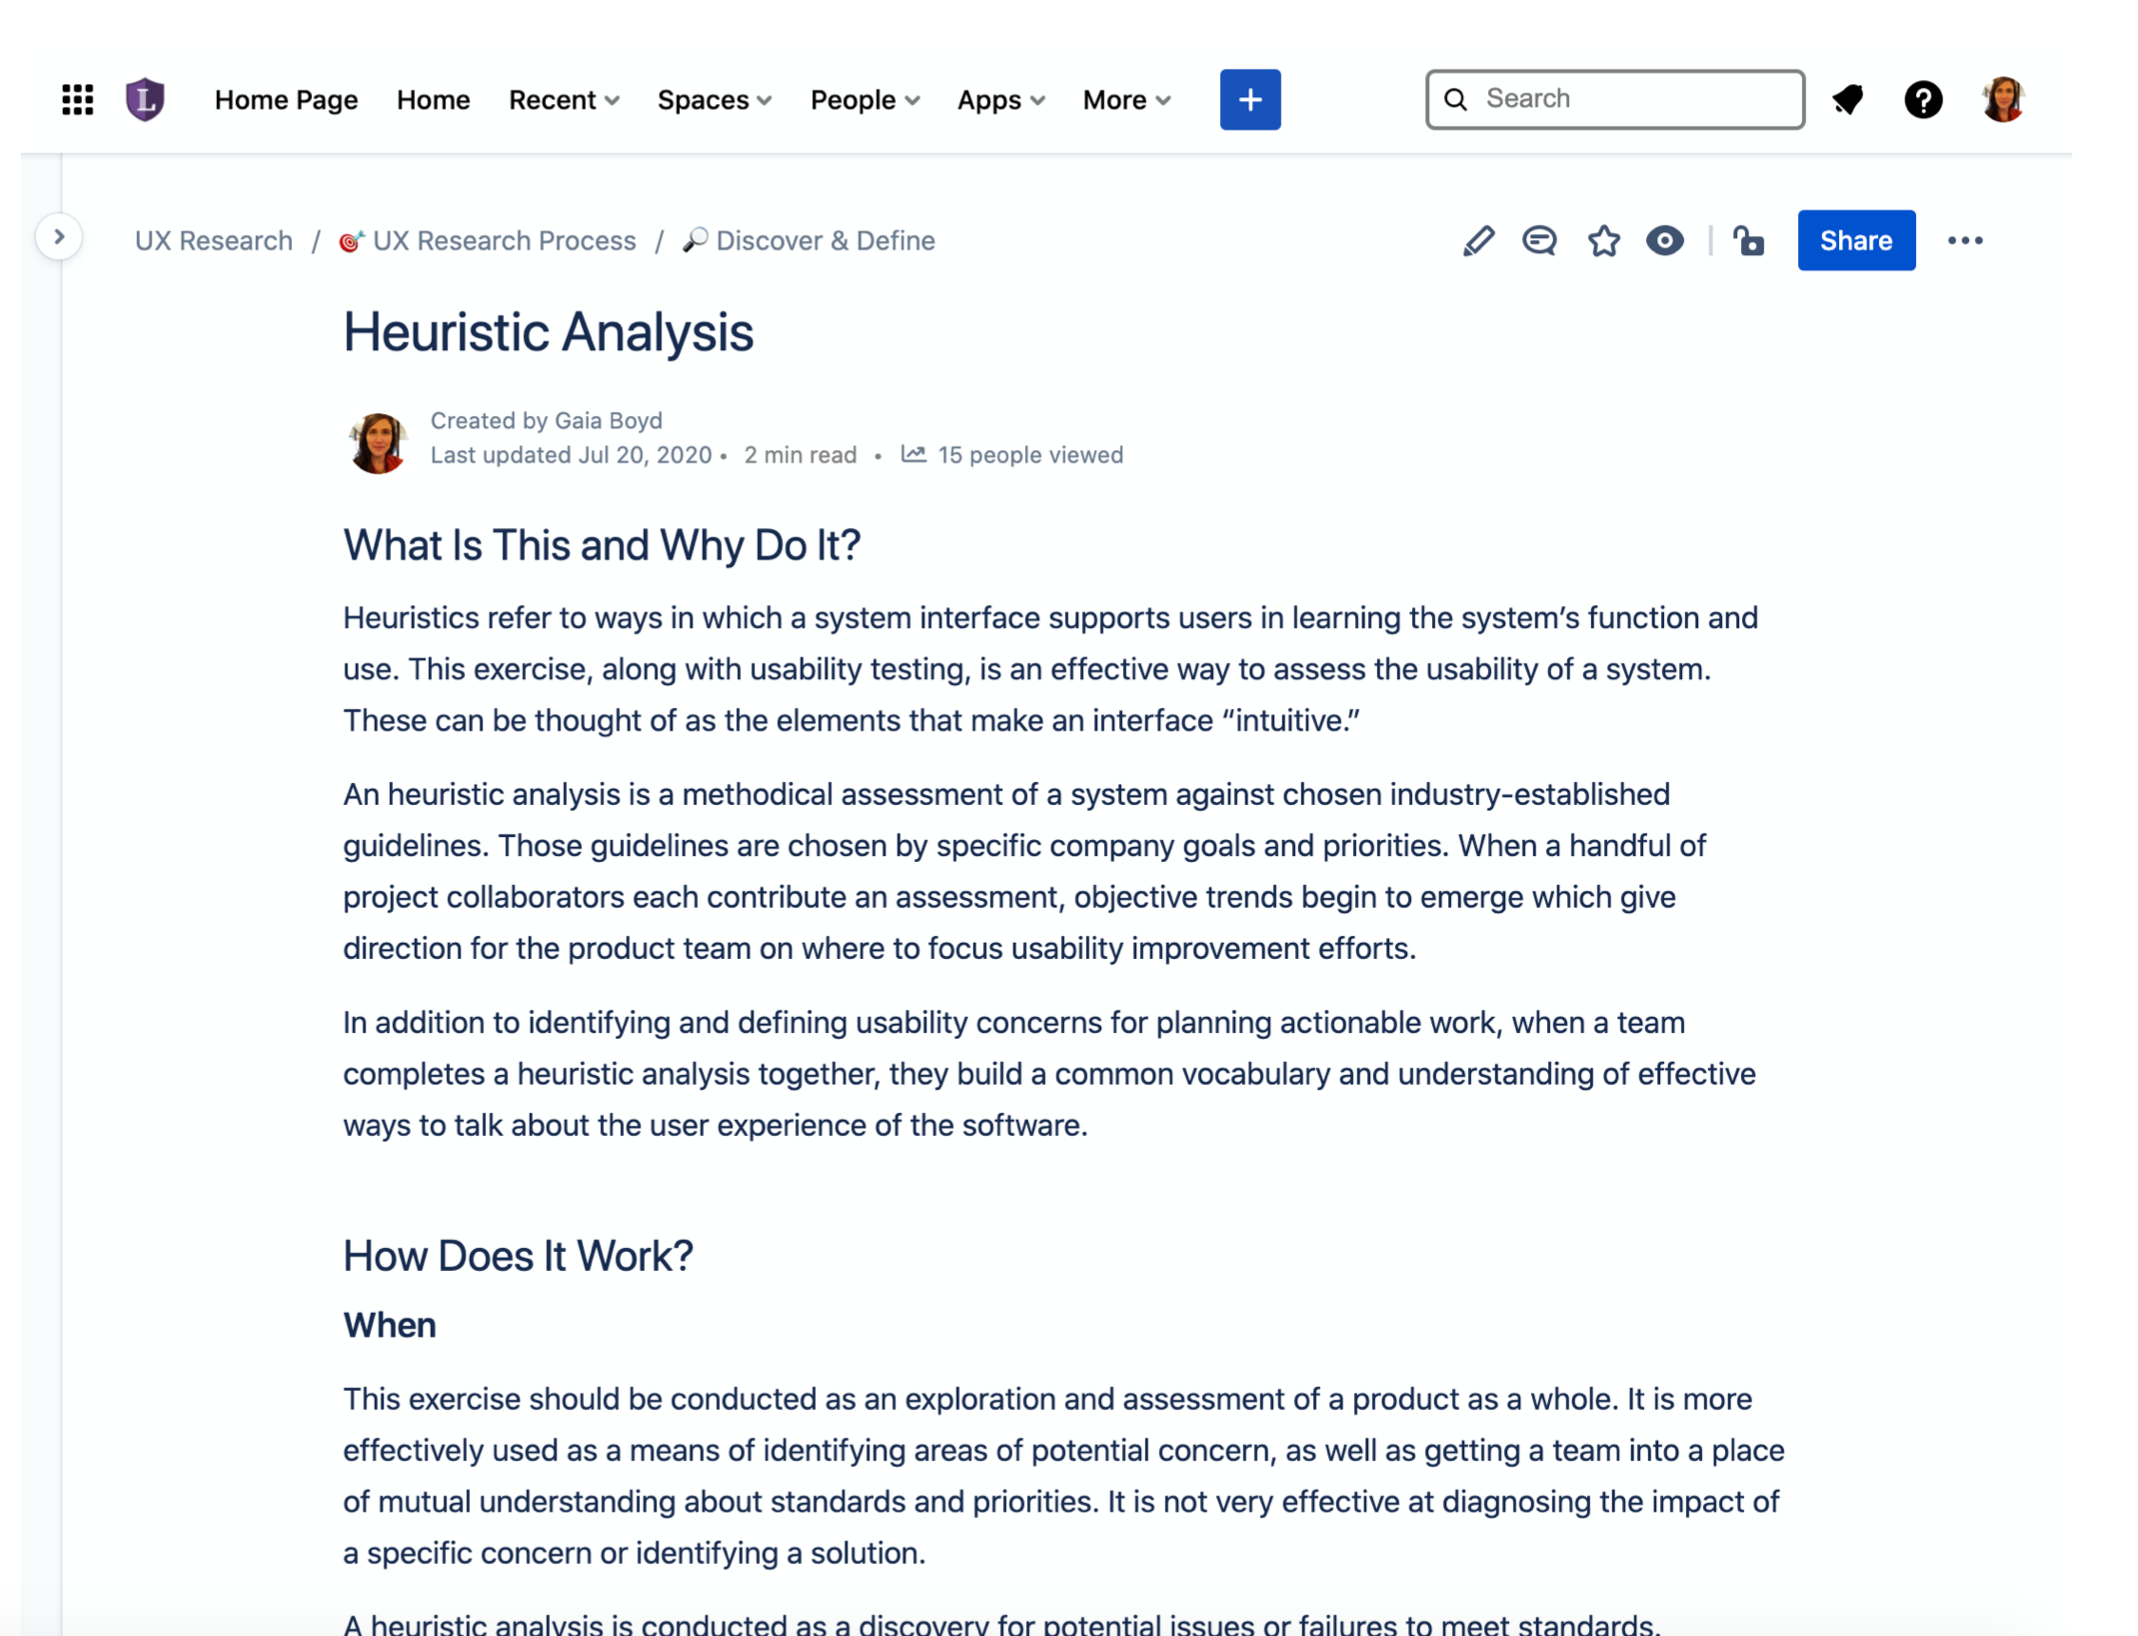 Heuristic Analysis Method Description